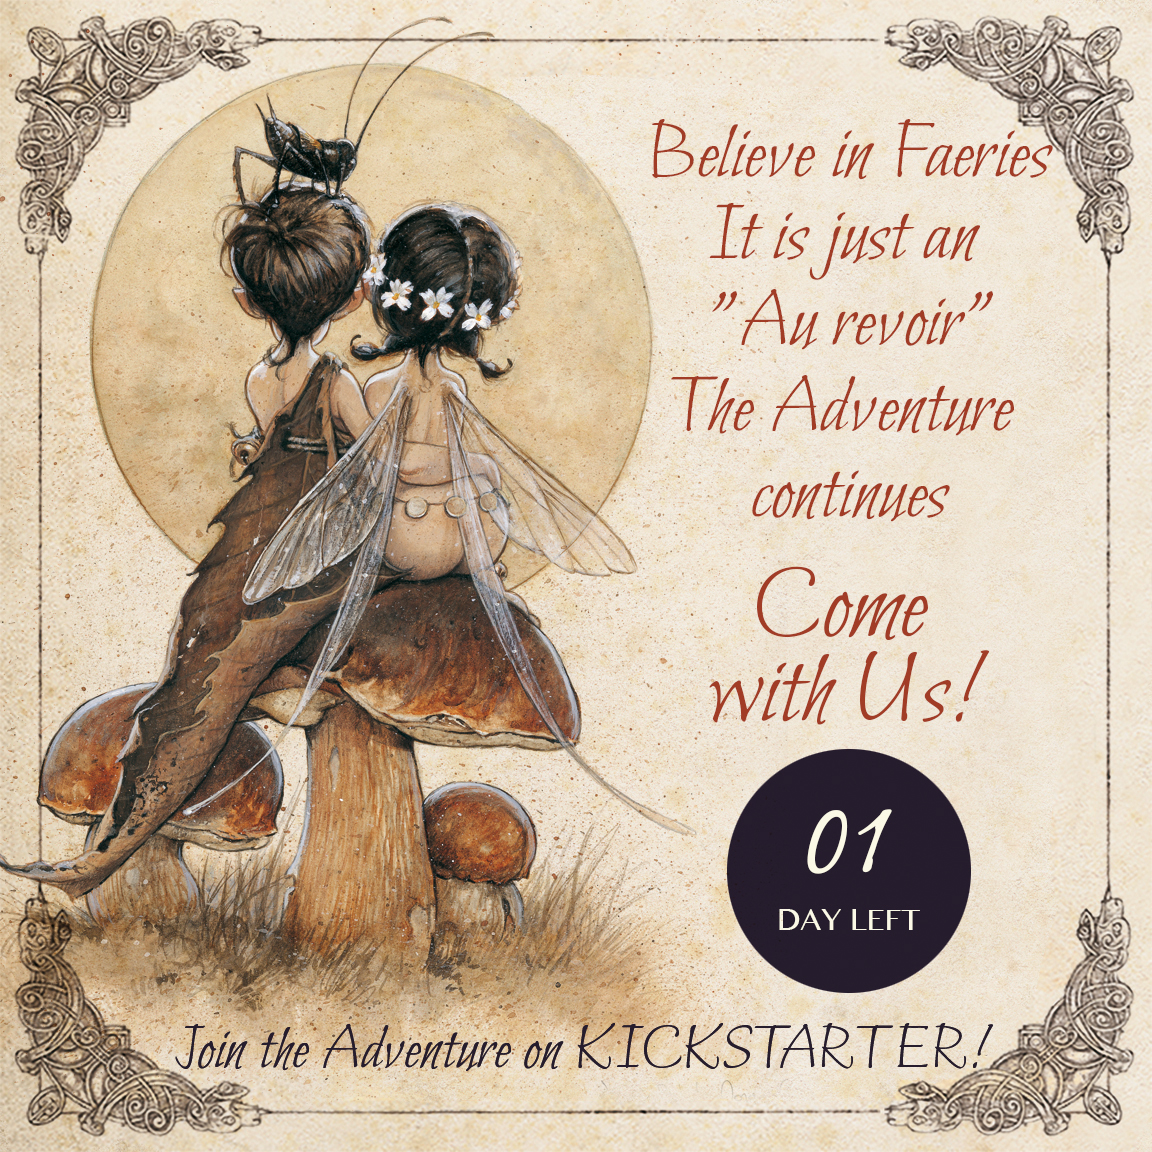 Kickstarter jbmonge thumbnails Celtic faeries fairy artbook mythology legend fairytale book